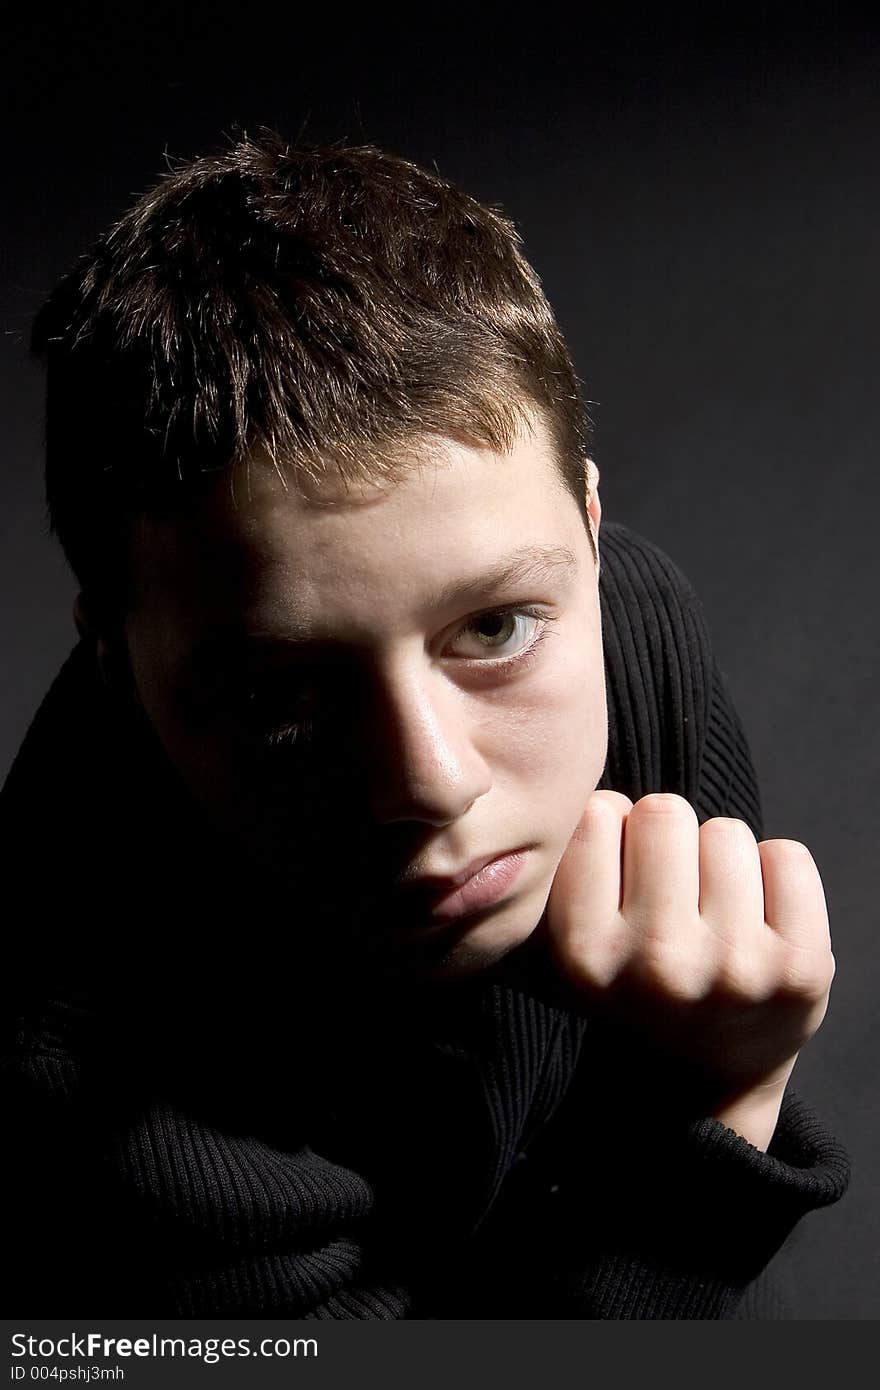 Teenager portrait looking up towards camera against black backdrop